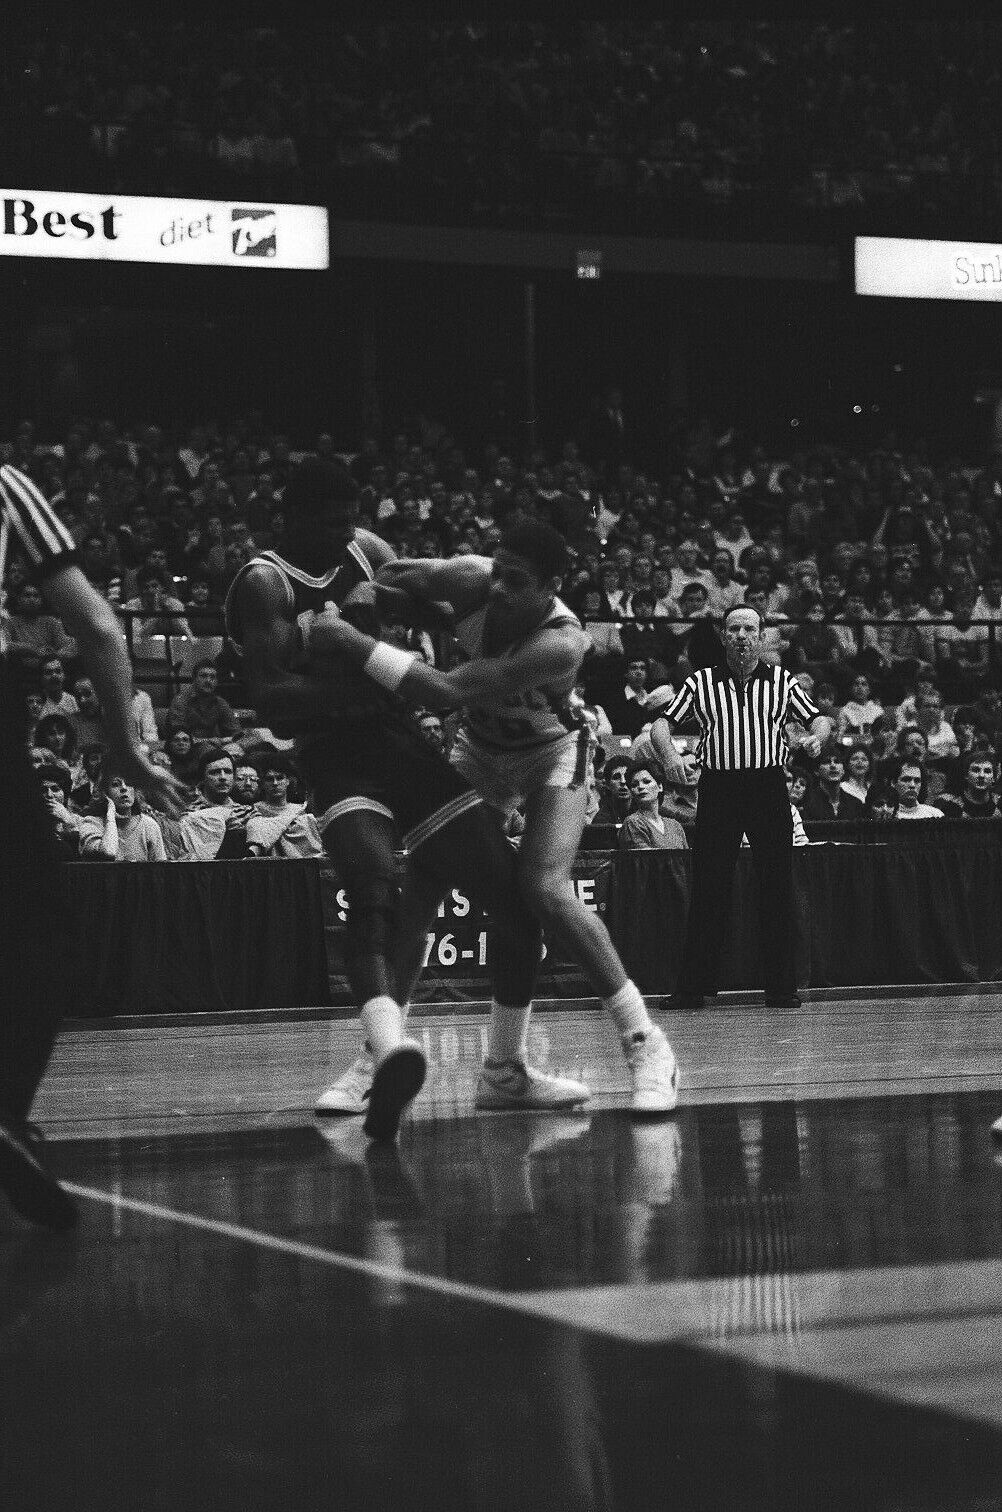 LD125-46 1986 College Basketball DePaul UAB Blazers (55) ORIG 35mm B&W NEGATIVES Без бренда - фотография #12